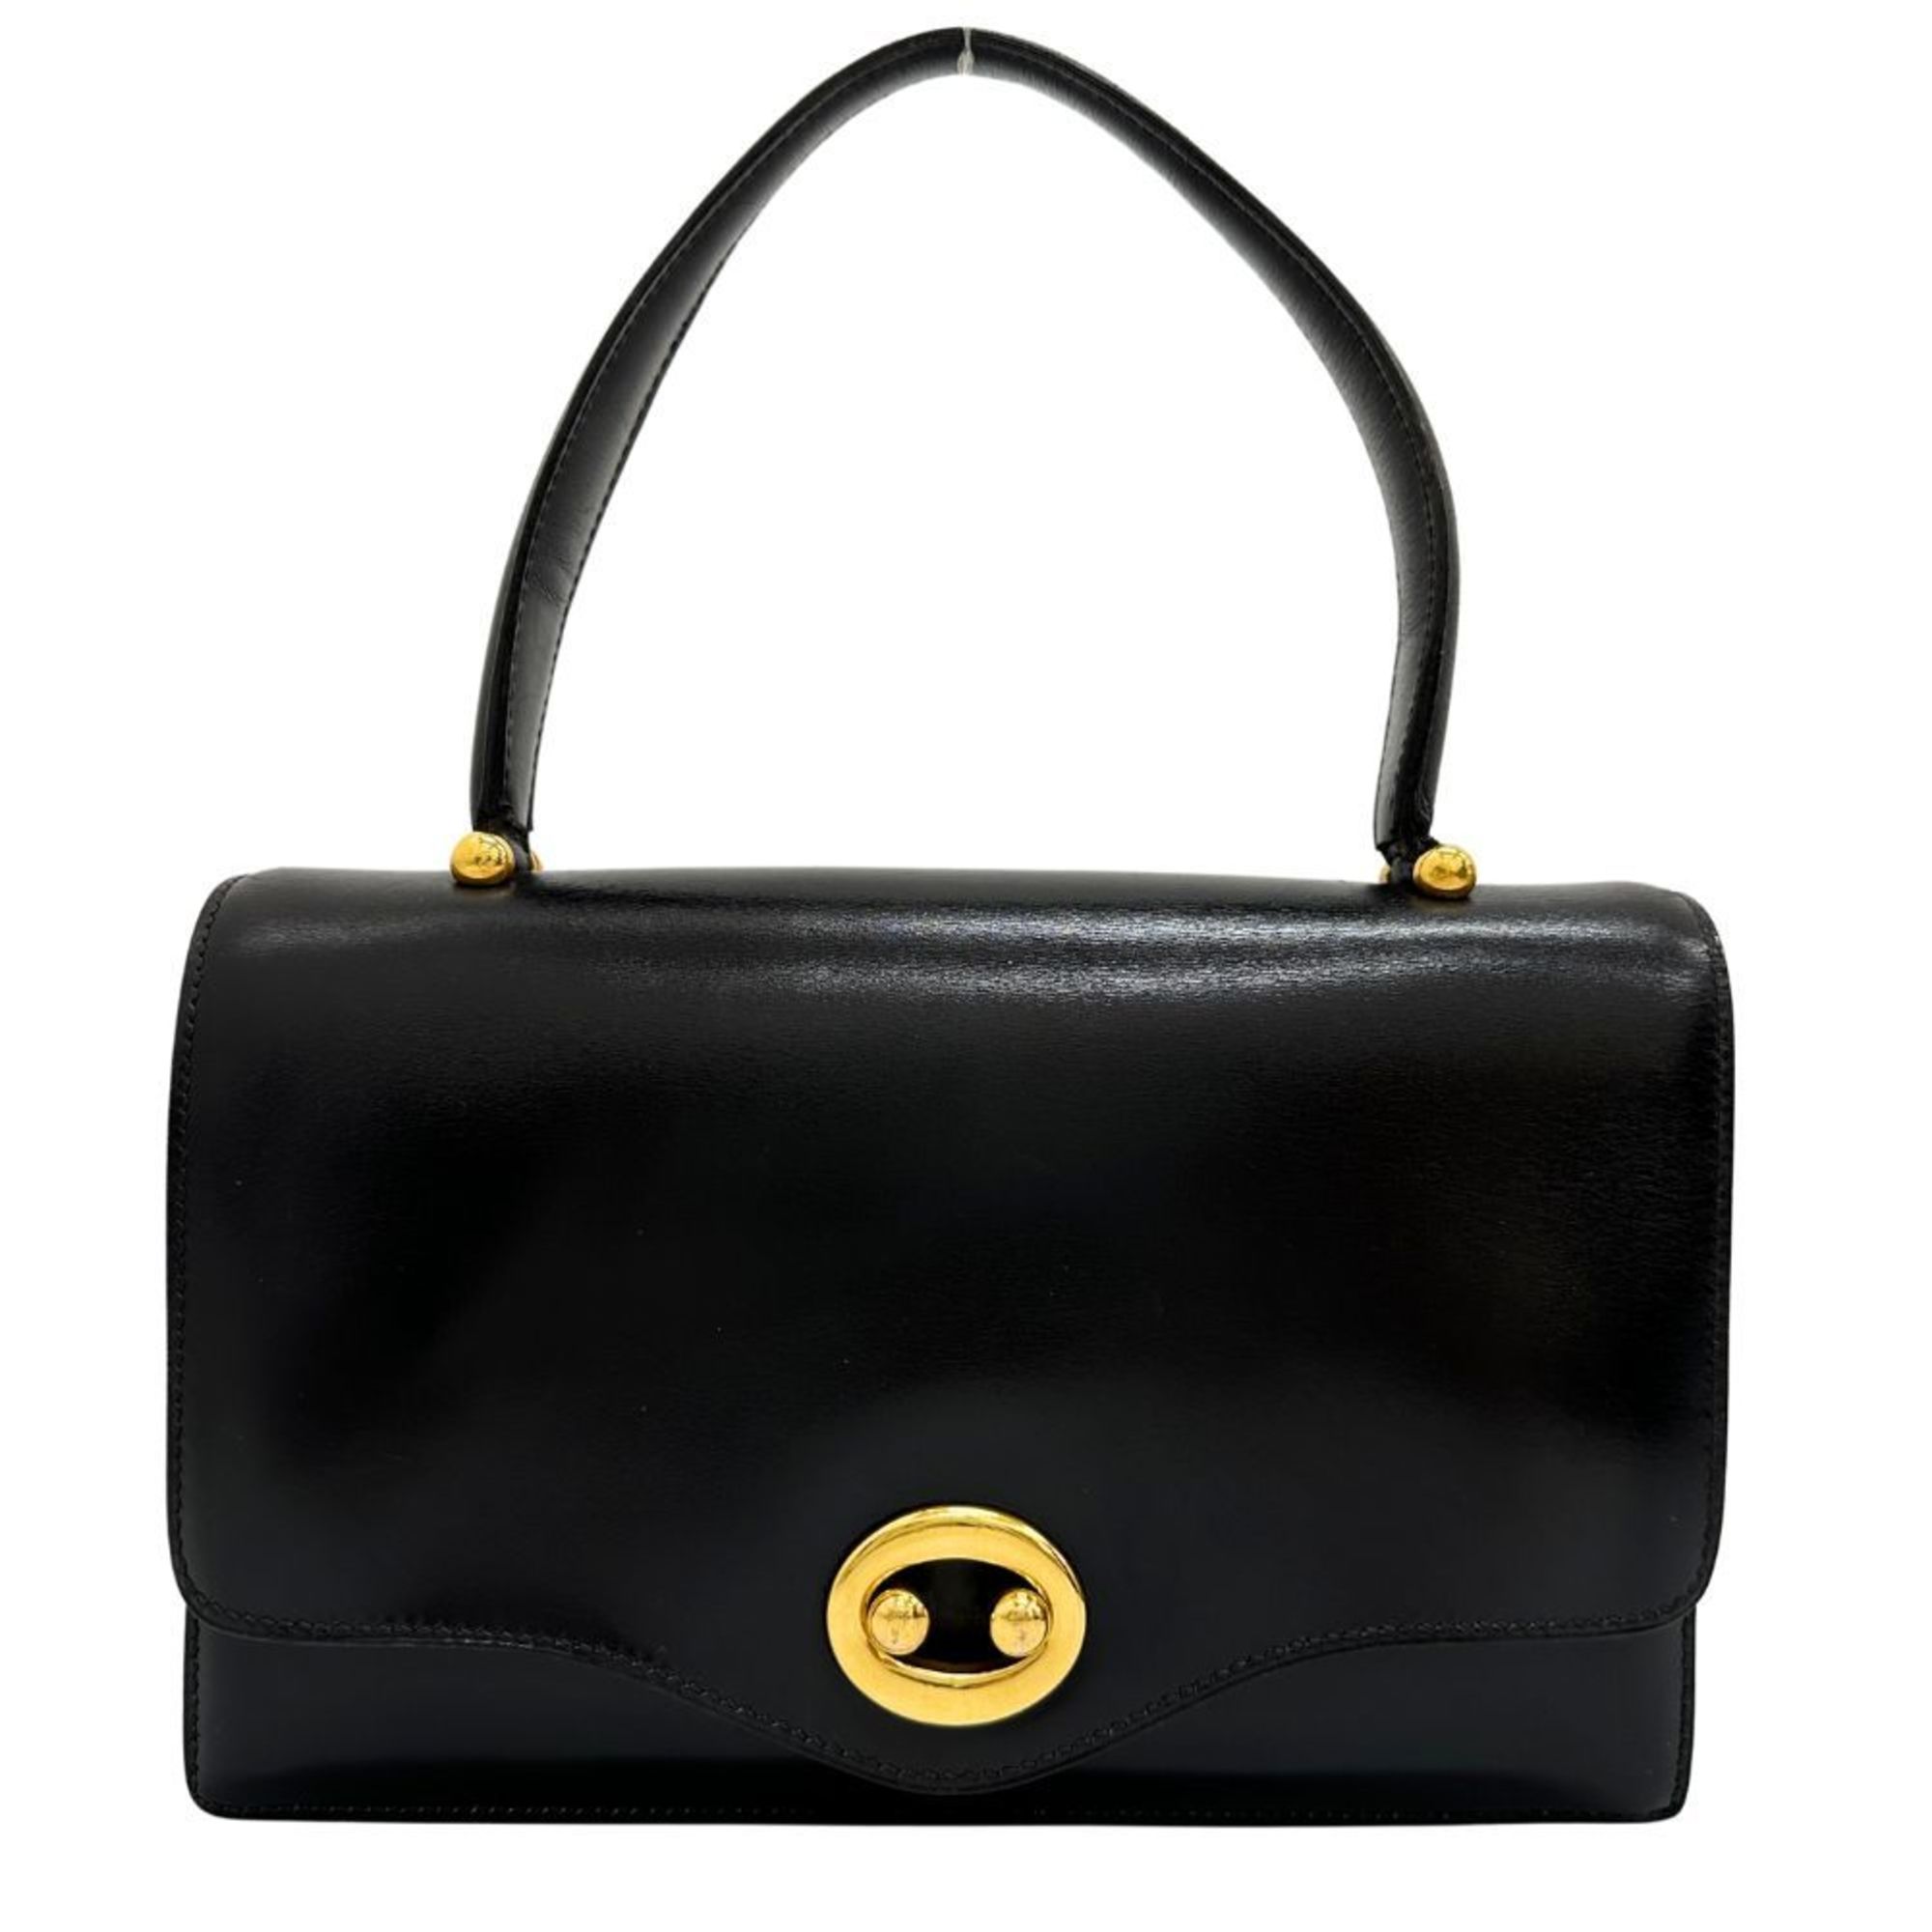 Hermes HERMES handbag box calf black flap vintage ladies I111624040